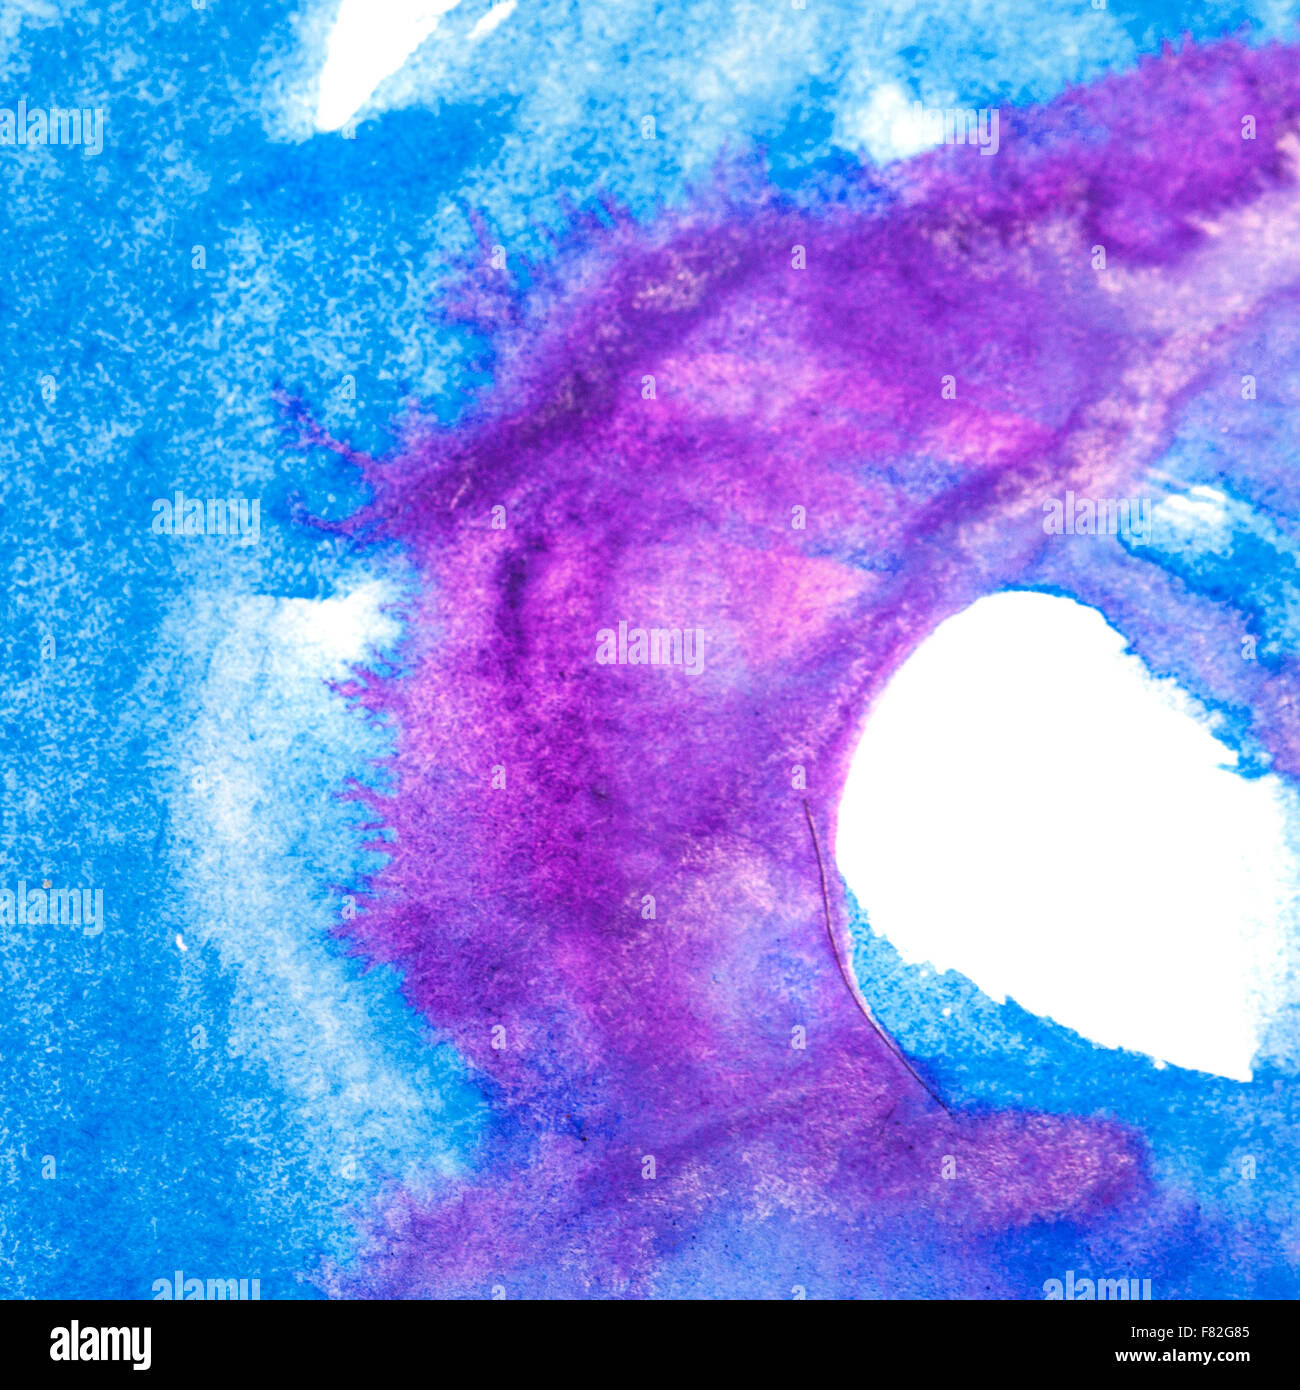 Abstract art oil paint. Paint brush strokes on canvas closeup. Design elements. Color conversions. Blue, purple. Stock Photo